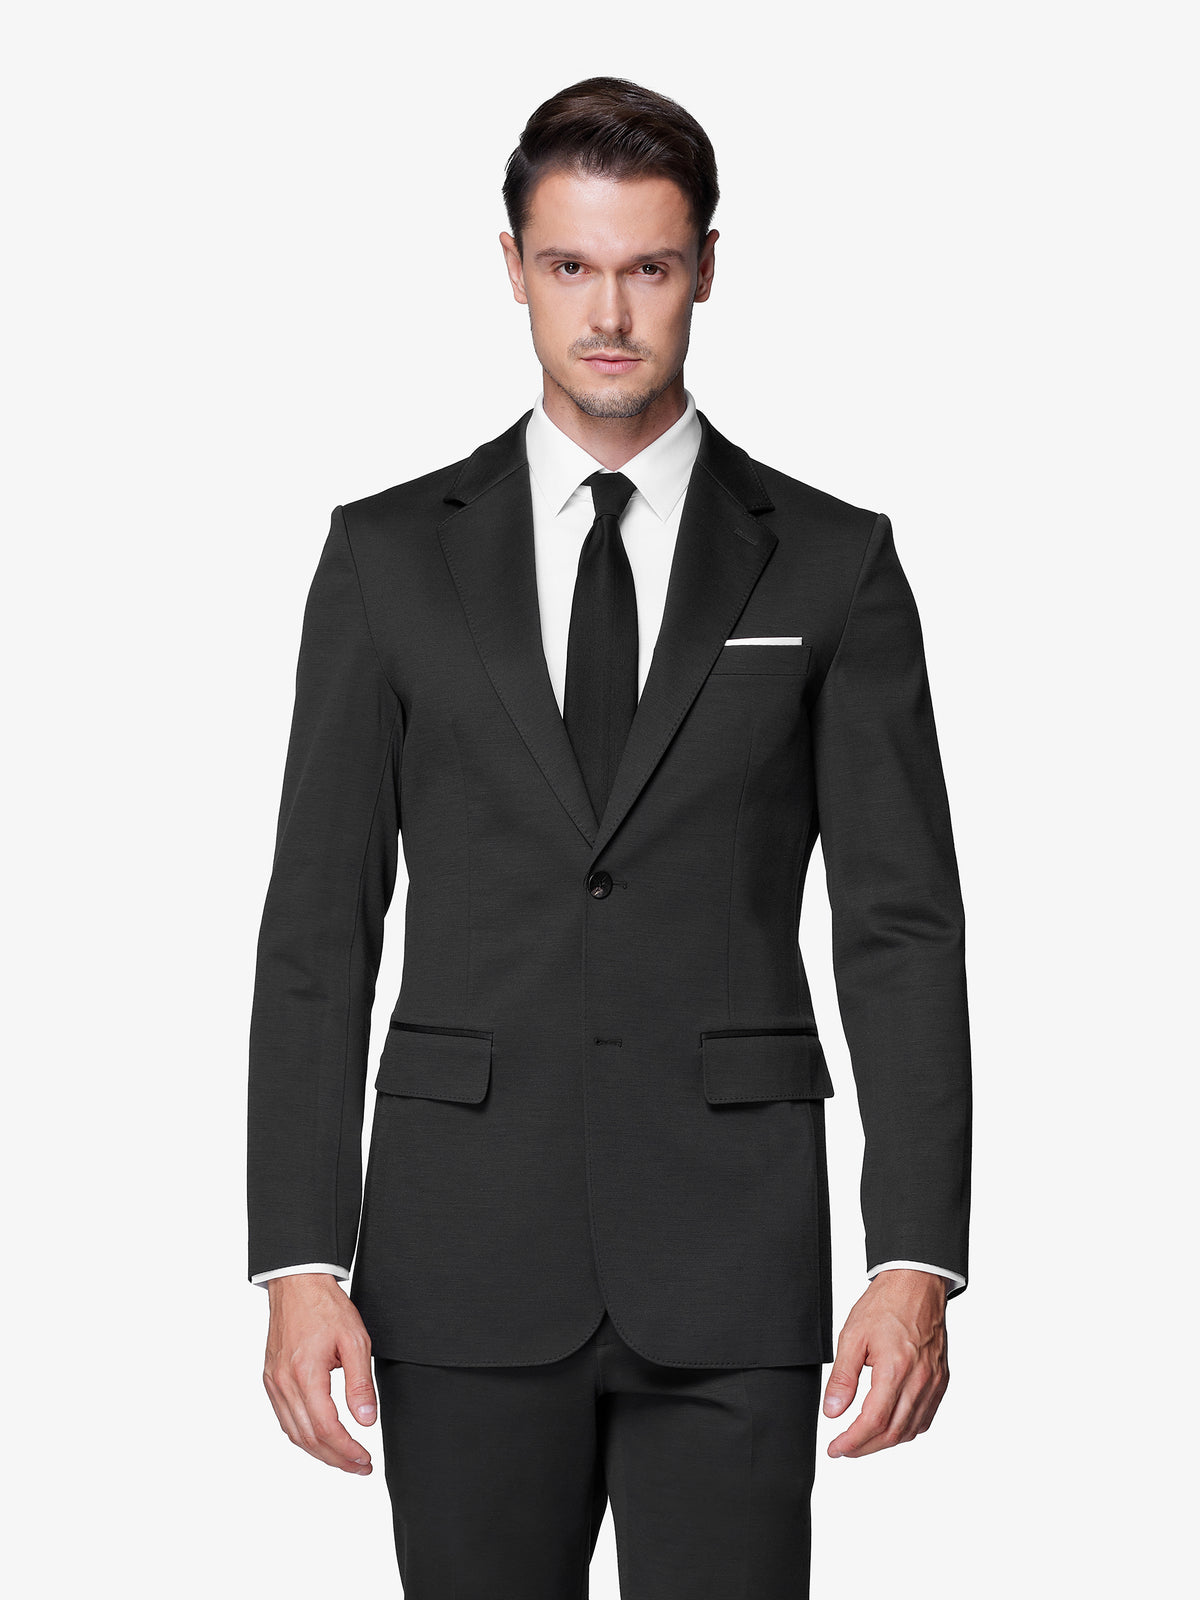 SuitShop | Suits & Tuxedos for Men, Women, & Everyone